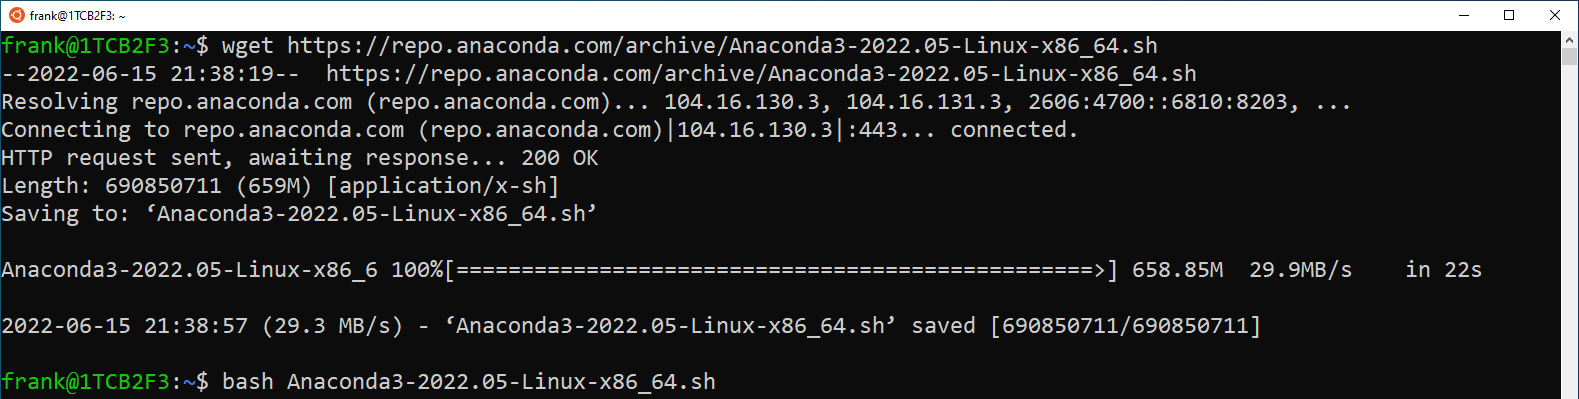 Screenshot of downloading and installing Anaconda in
WSL